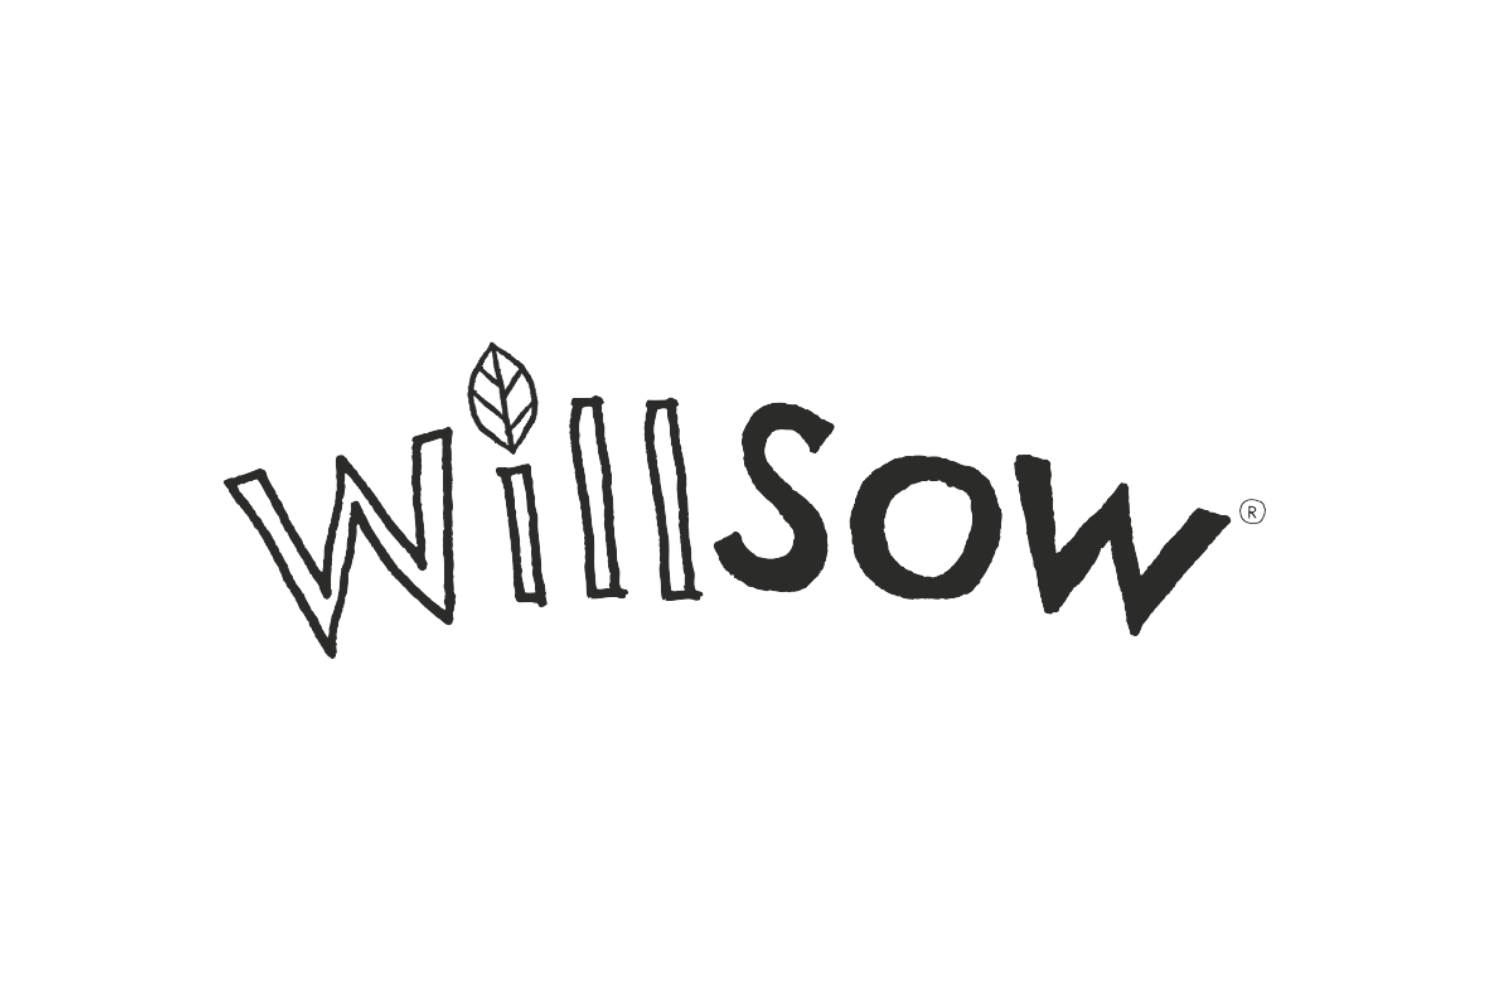 willsow logo